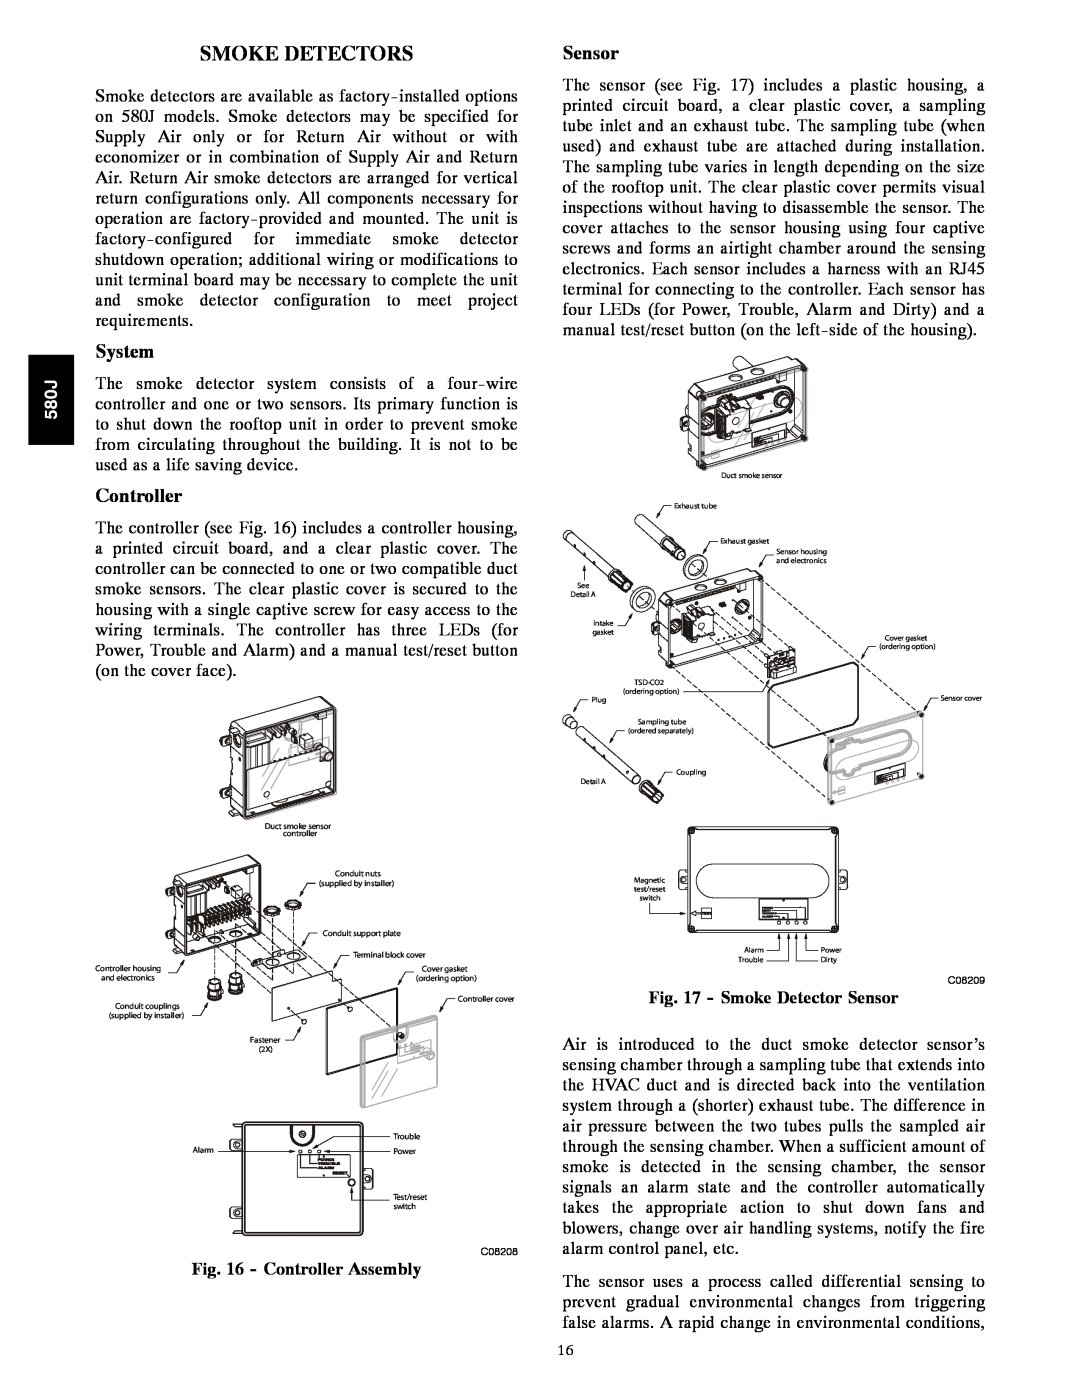 Bryant 580J*04--12 appendix Smoke Detectors, System, Controller Assembly, Smoke Detector Sensor 